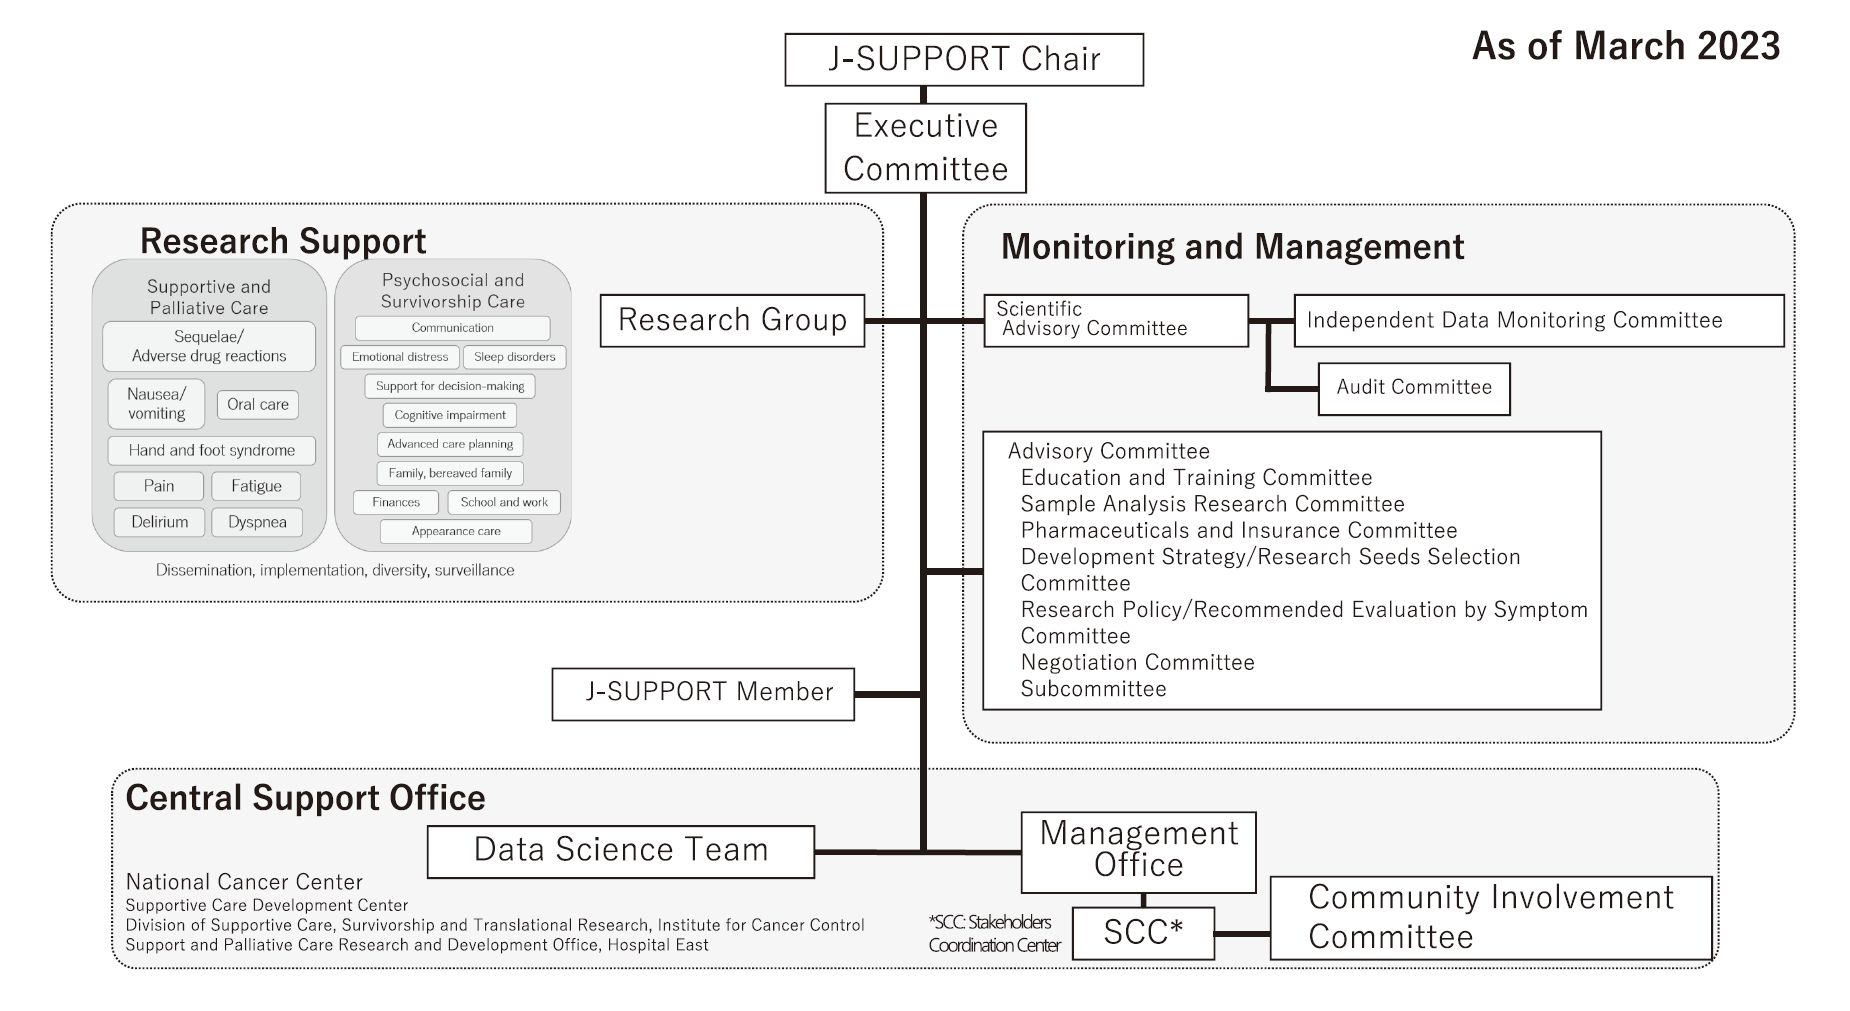 Figure 1. Organization of J-SUPPORT